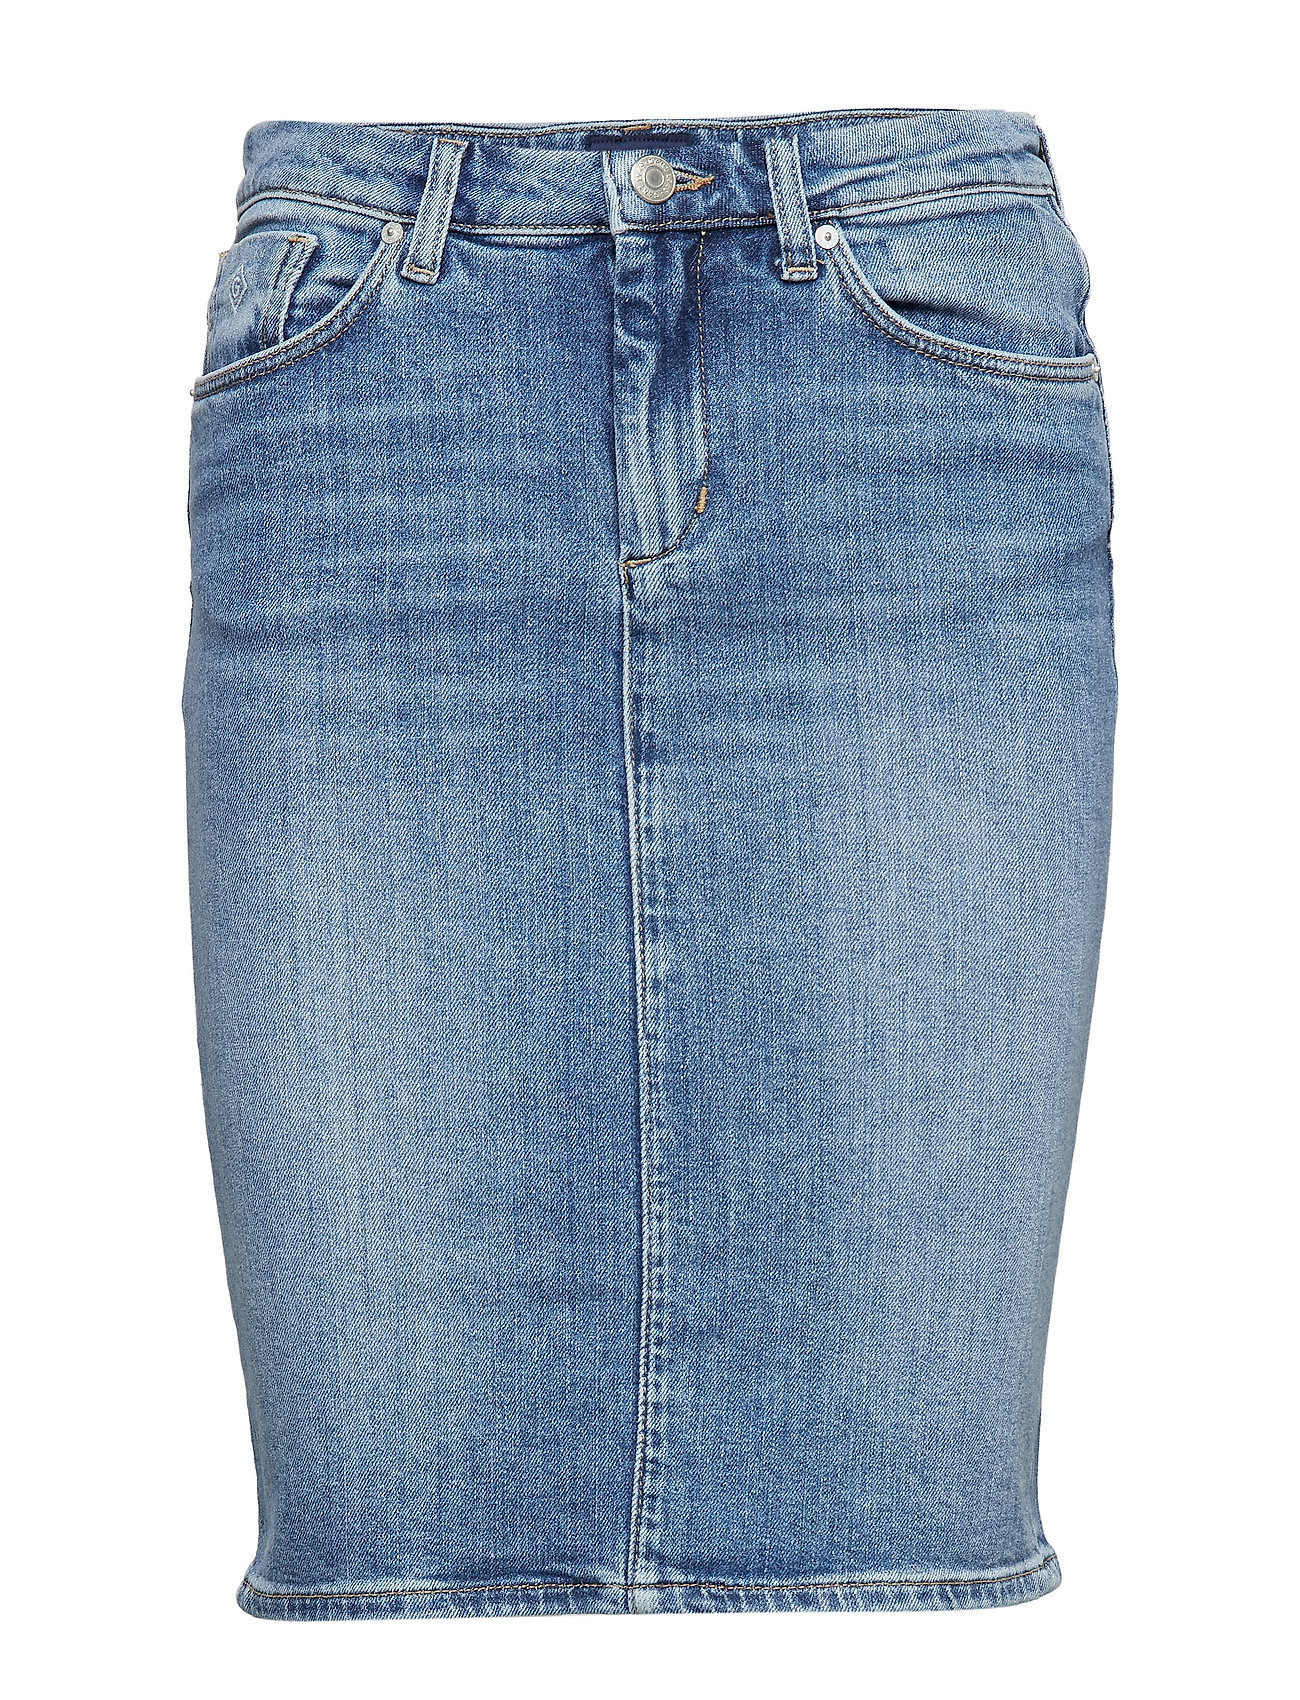 Blue 34                  EU discount 99% Xplosion shorts jeans WOMEN FASHION Jeans Worn-in 